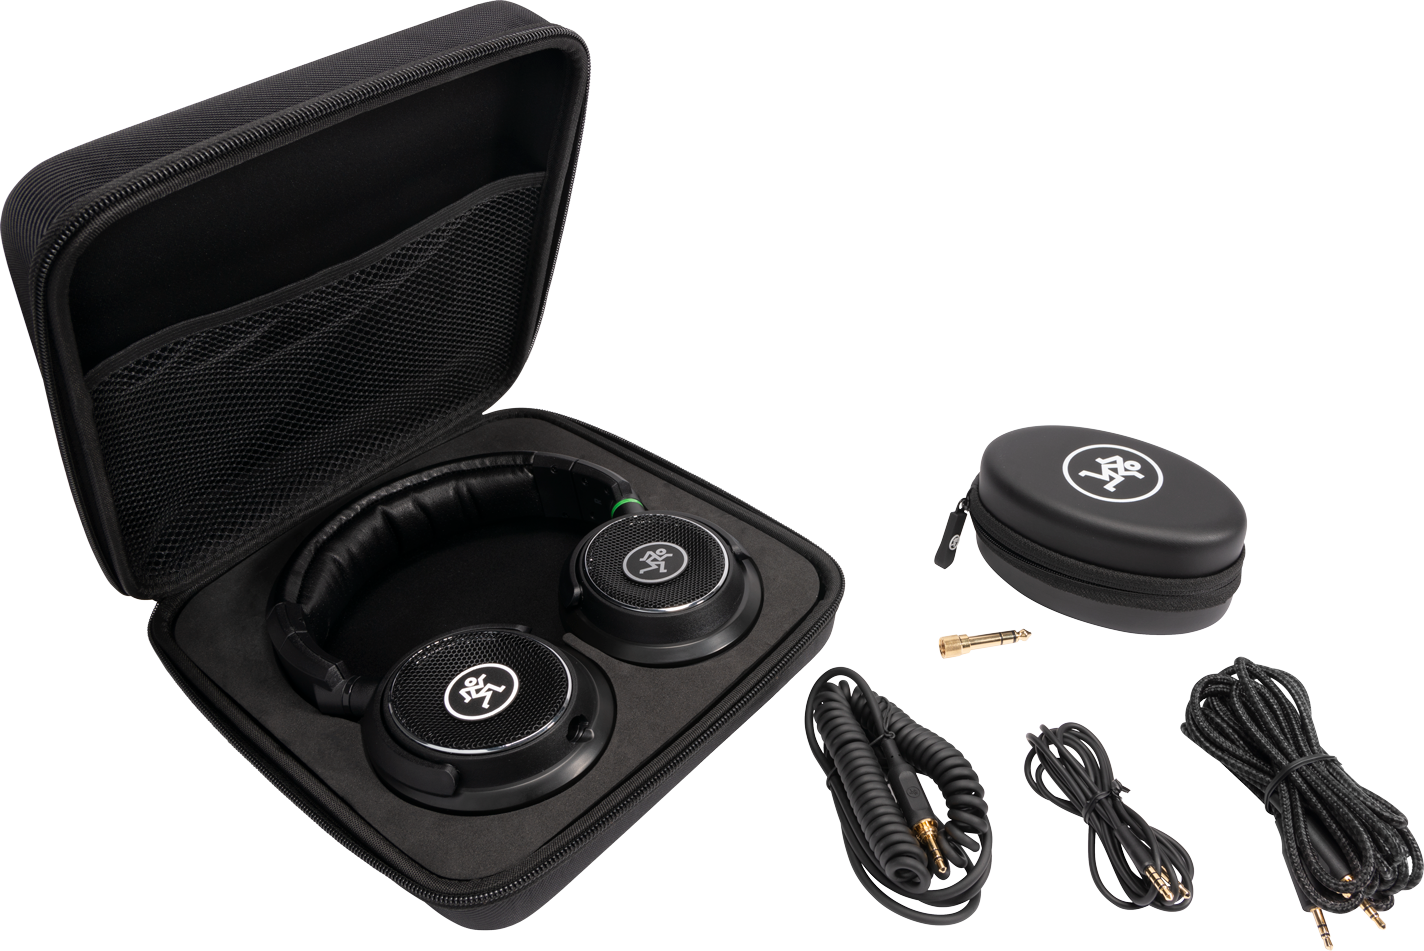 Gear Review: Mackie MC-450 Headphones